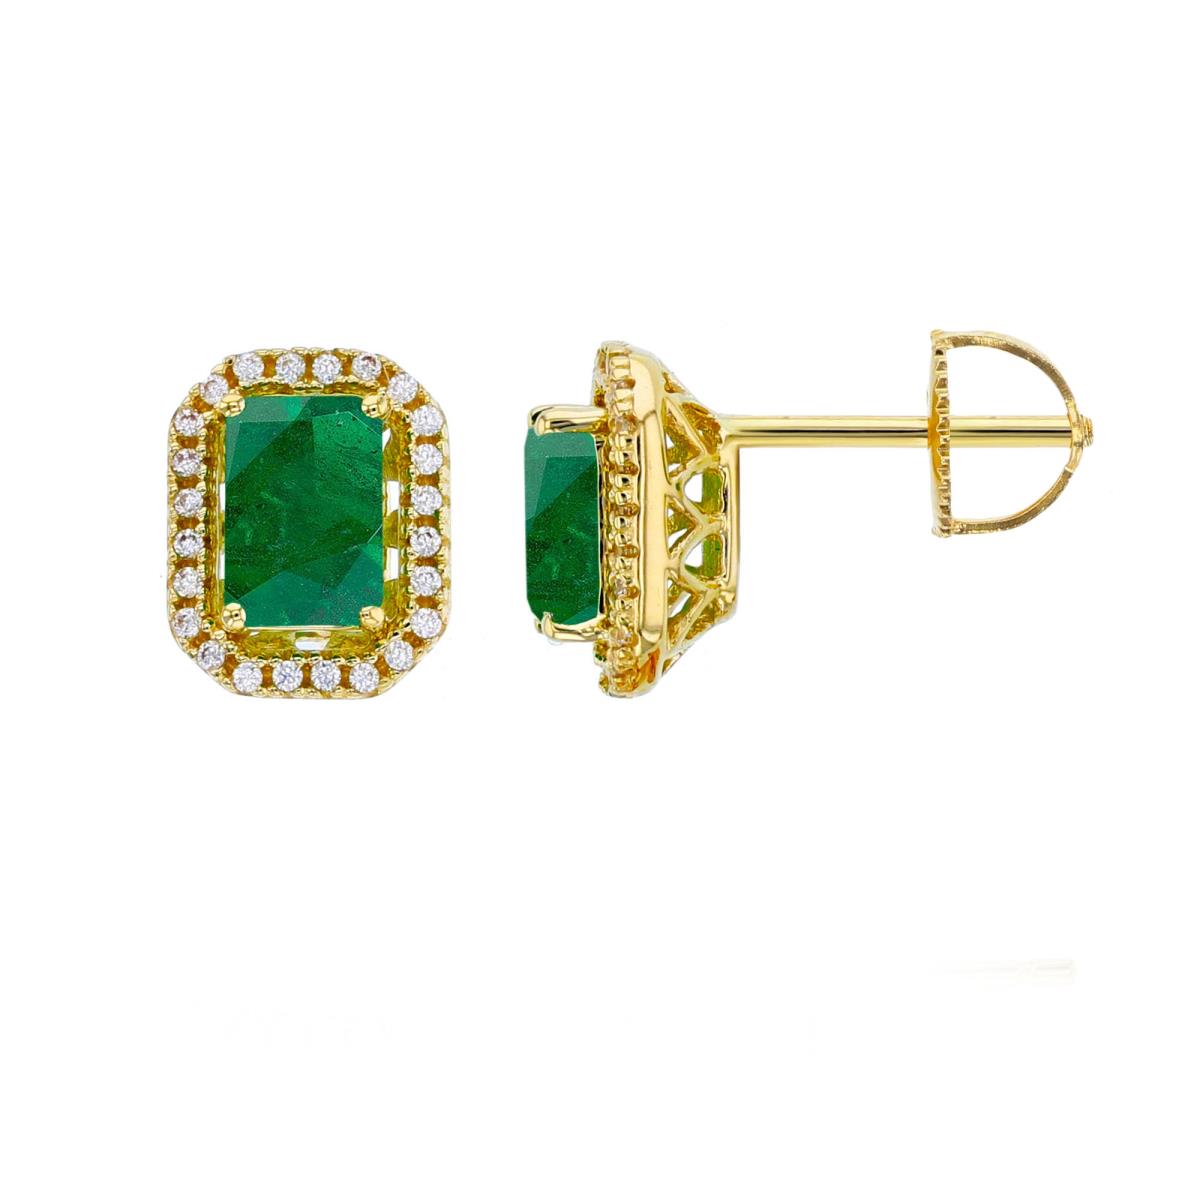 14K Yellow Gold 0.15 CTTW Rnd Diamonds & 6x4mm EC Emerald Cush Halo Stud Earring